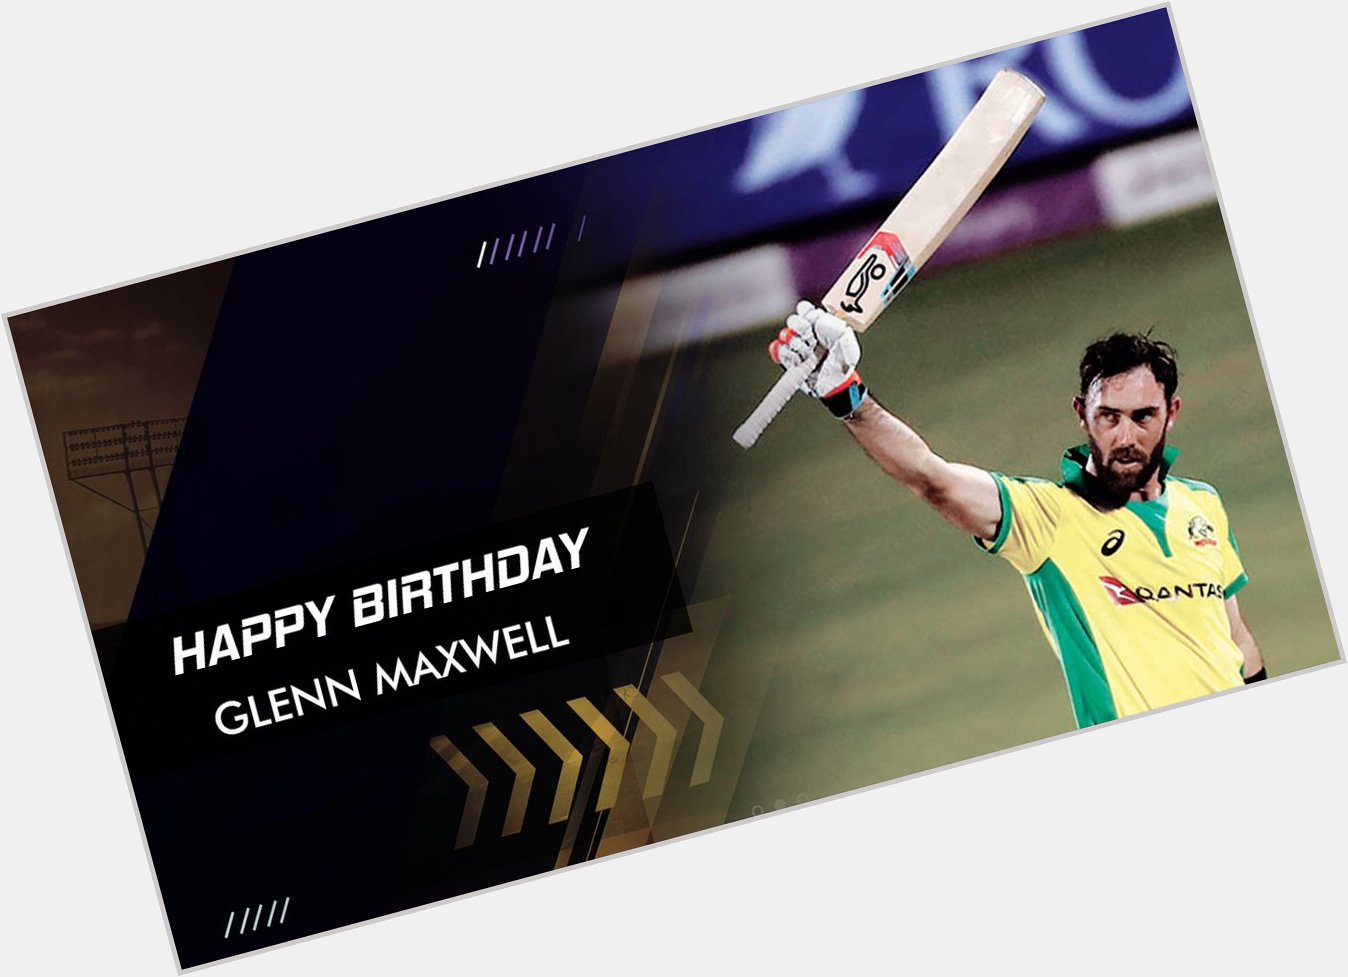 Happy Birthday!! Glenn Maxwell

Australian All-Rounder 